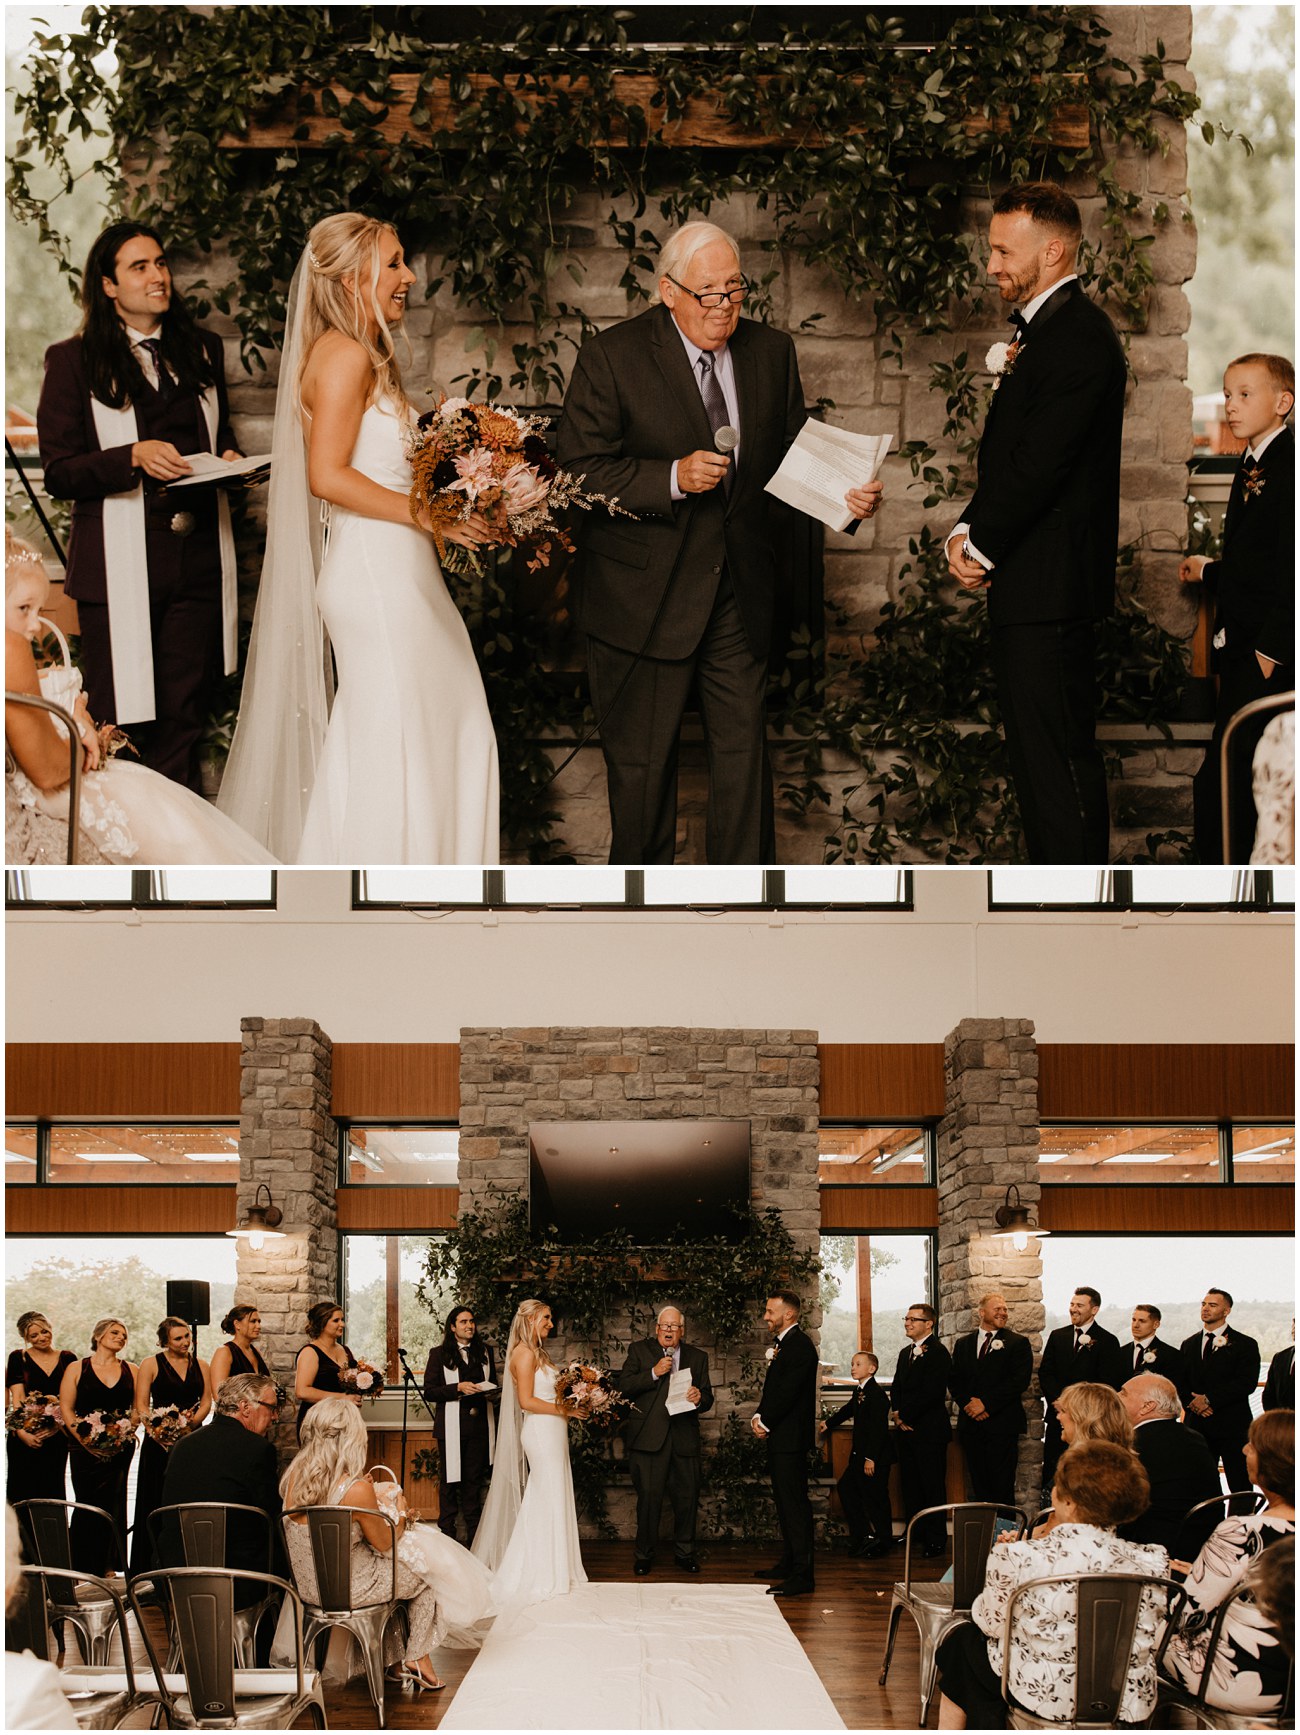 Wedding ceremony at Trout Lake wedding venue